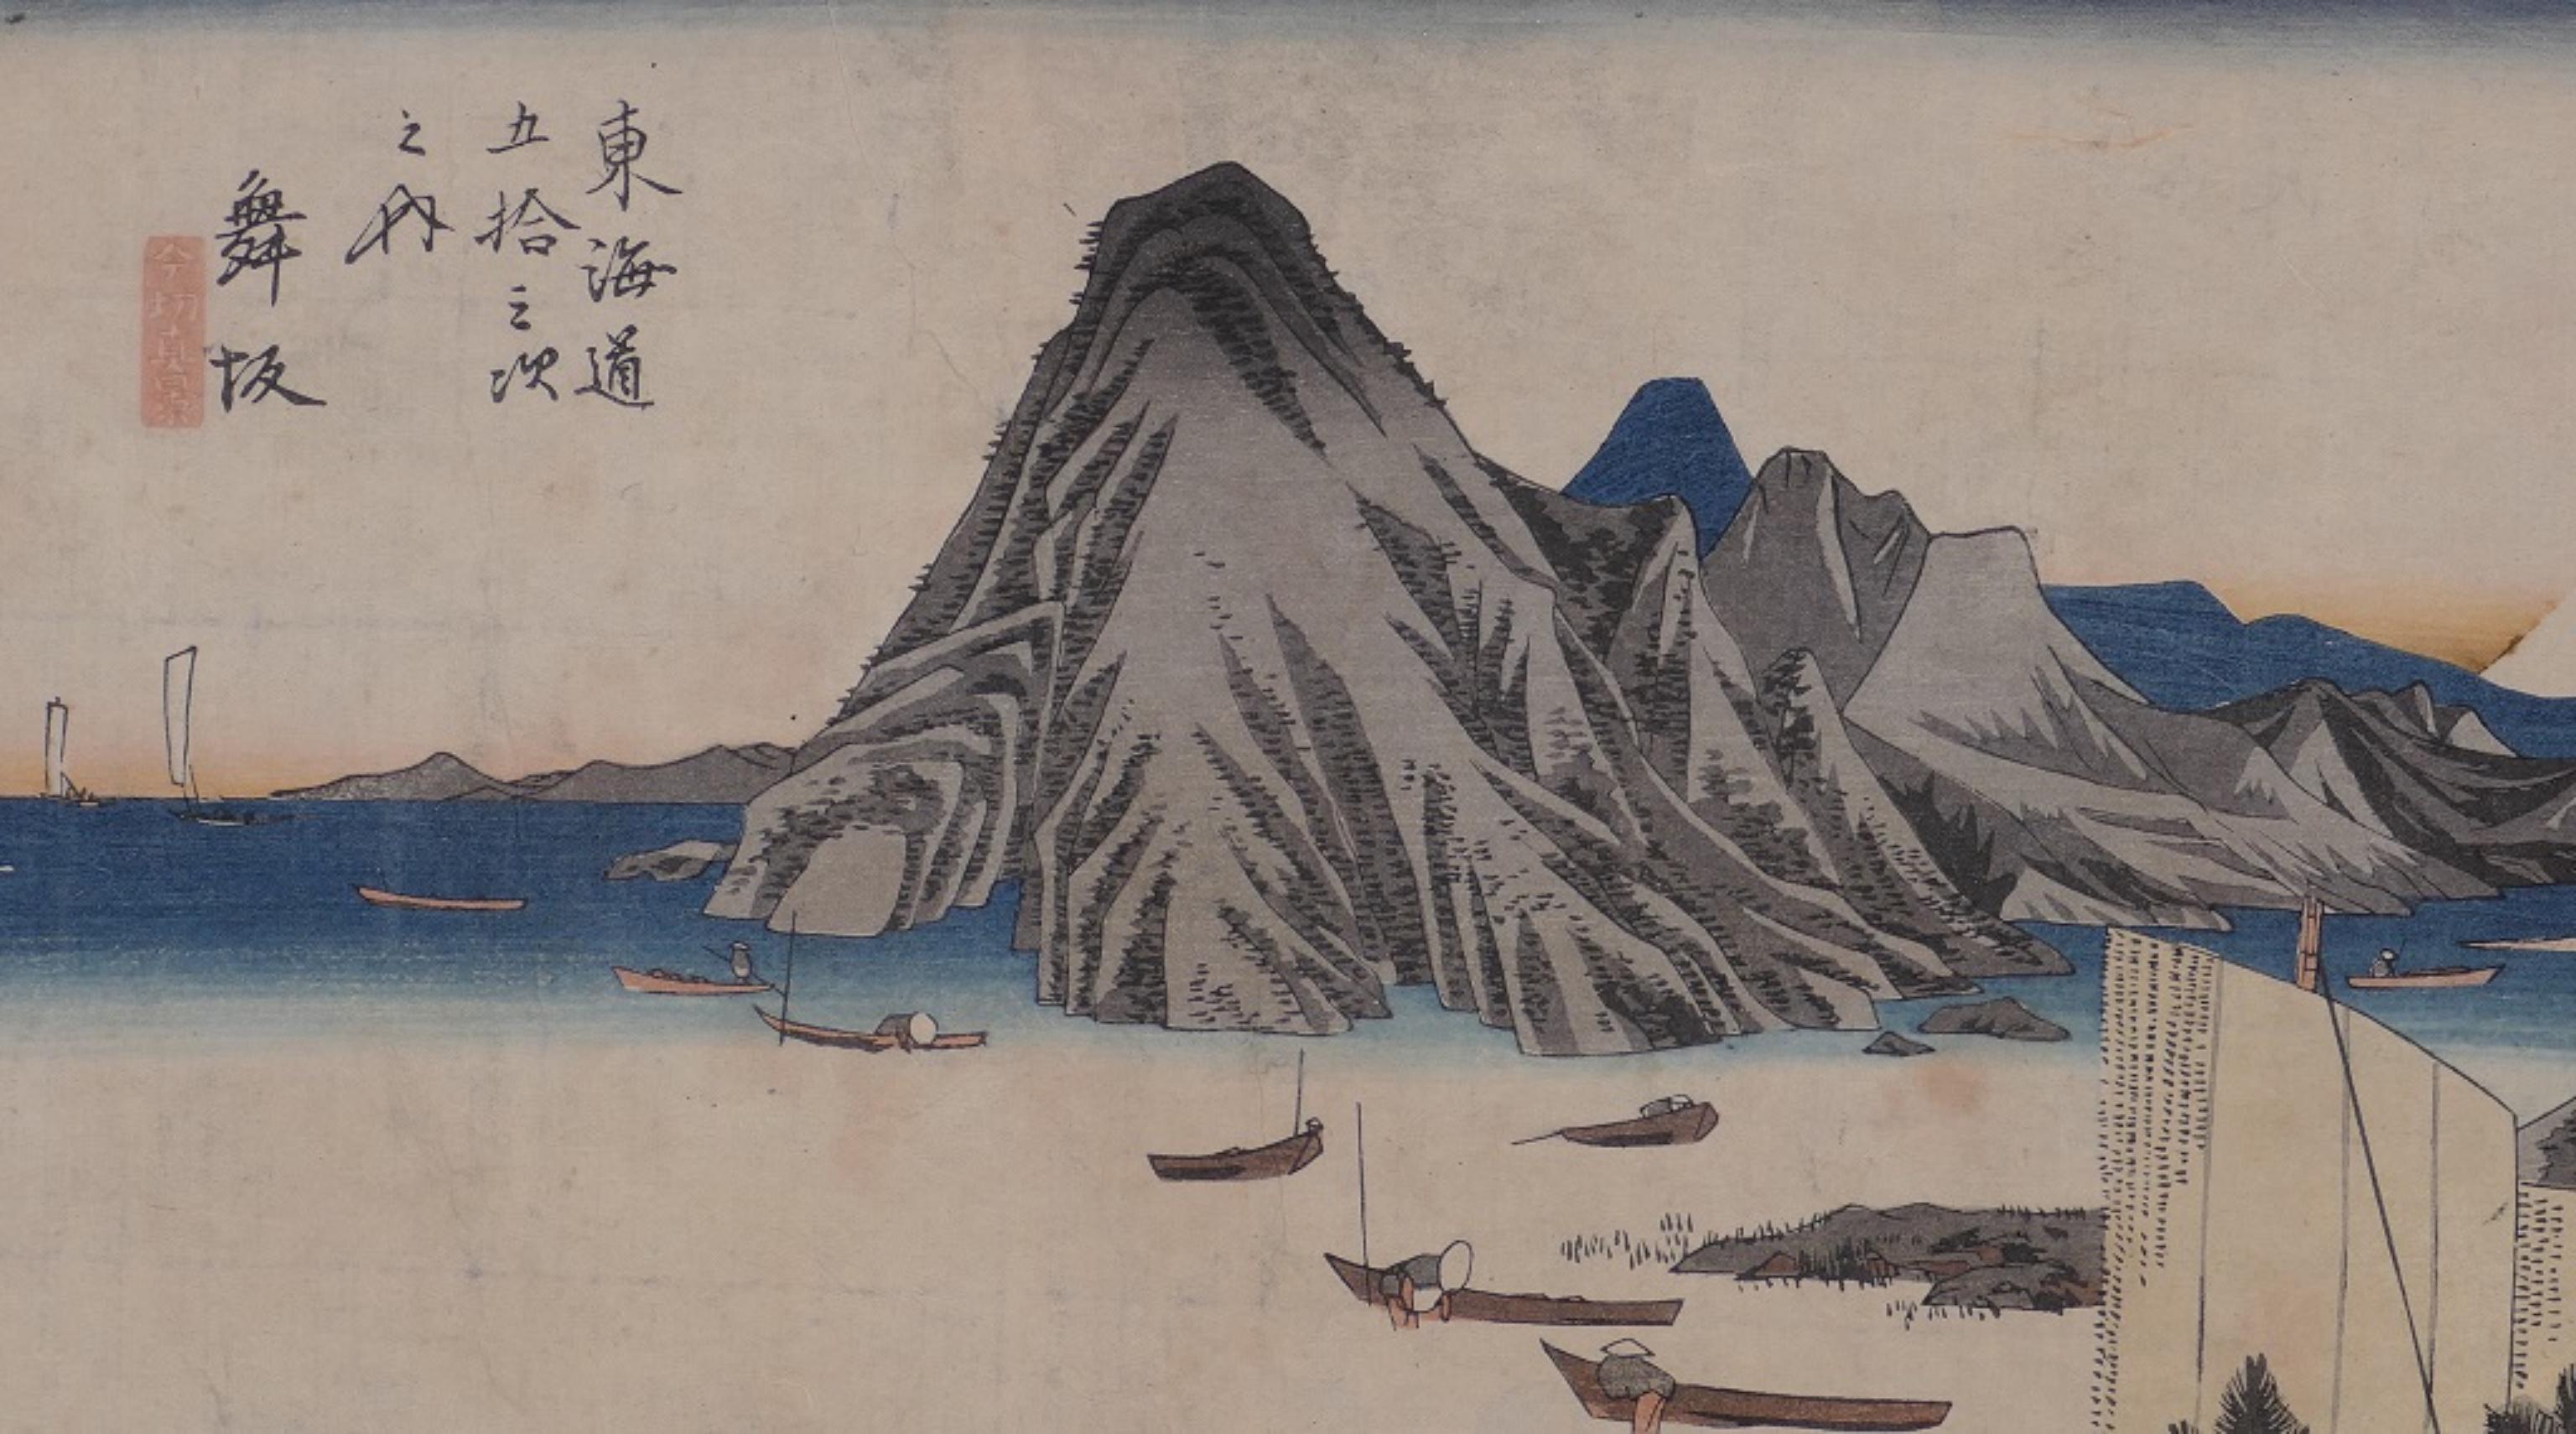 Maisaka, Imagiri Shink - Orignal Woodcut by Utagawa Hiroshige - 1833 ca 2